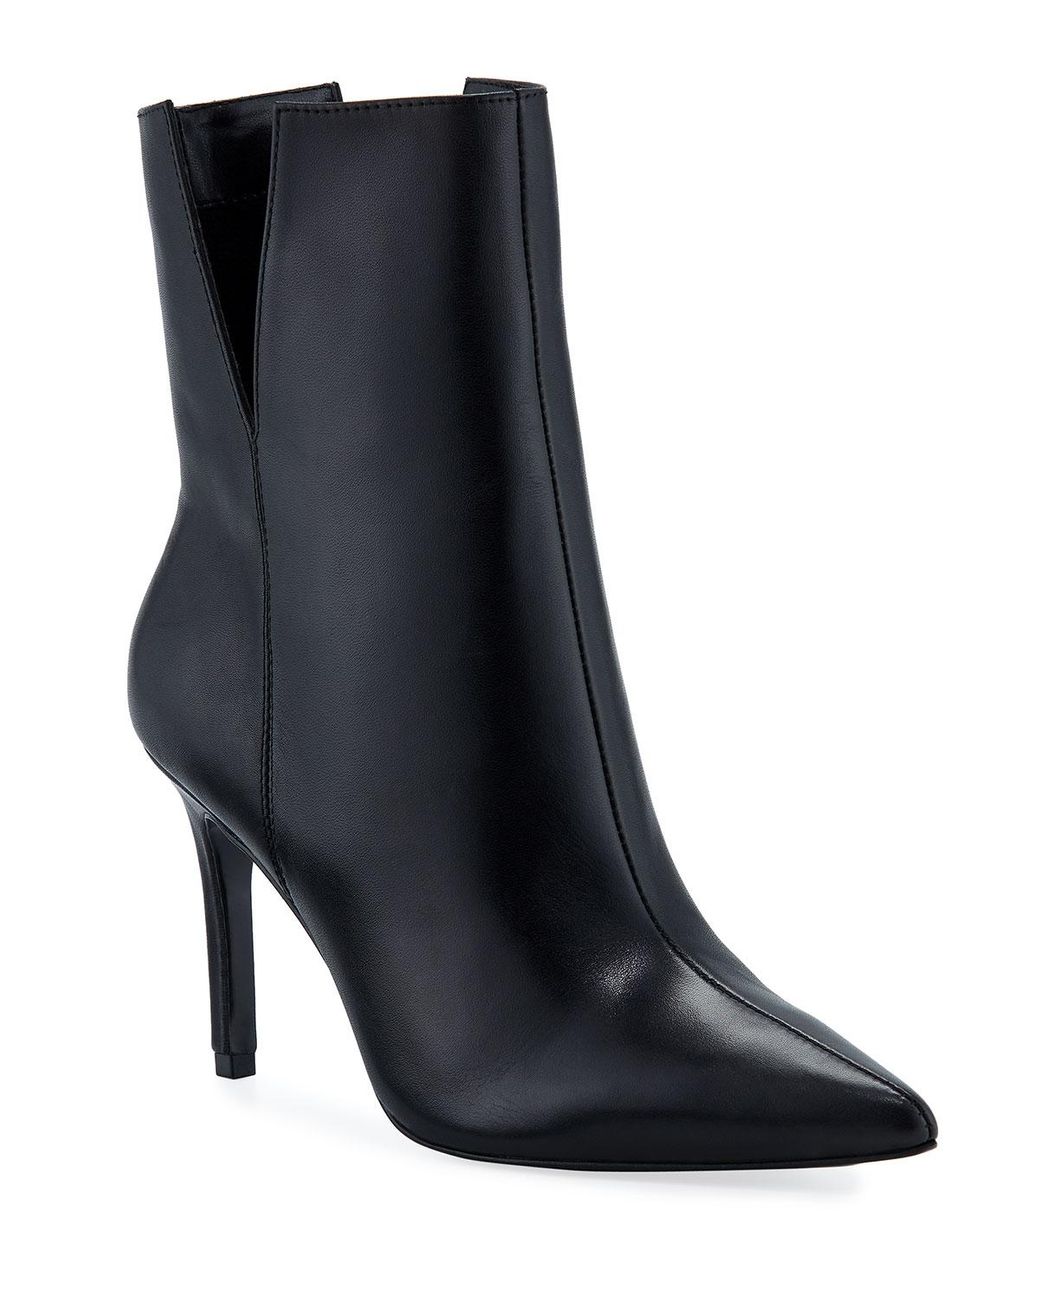 black leather stiletto booties